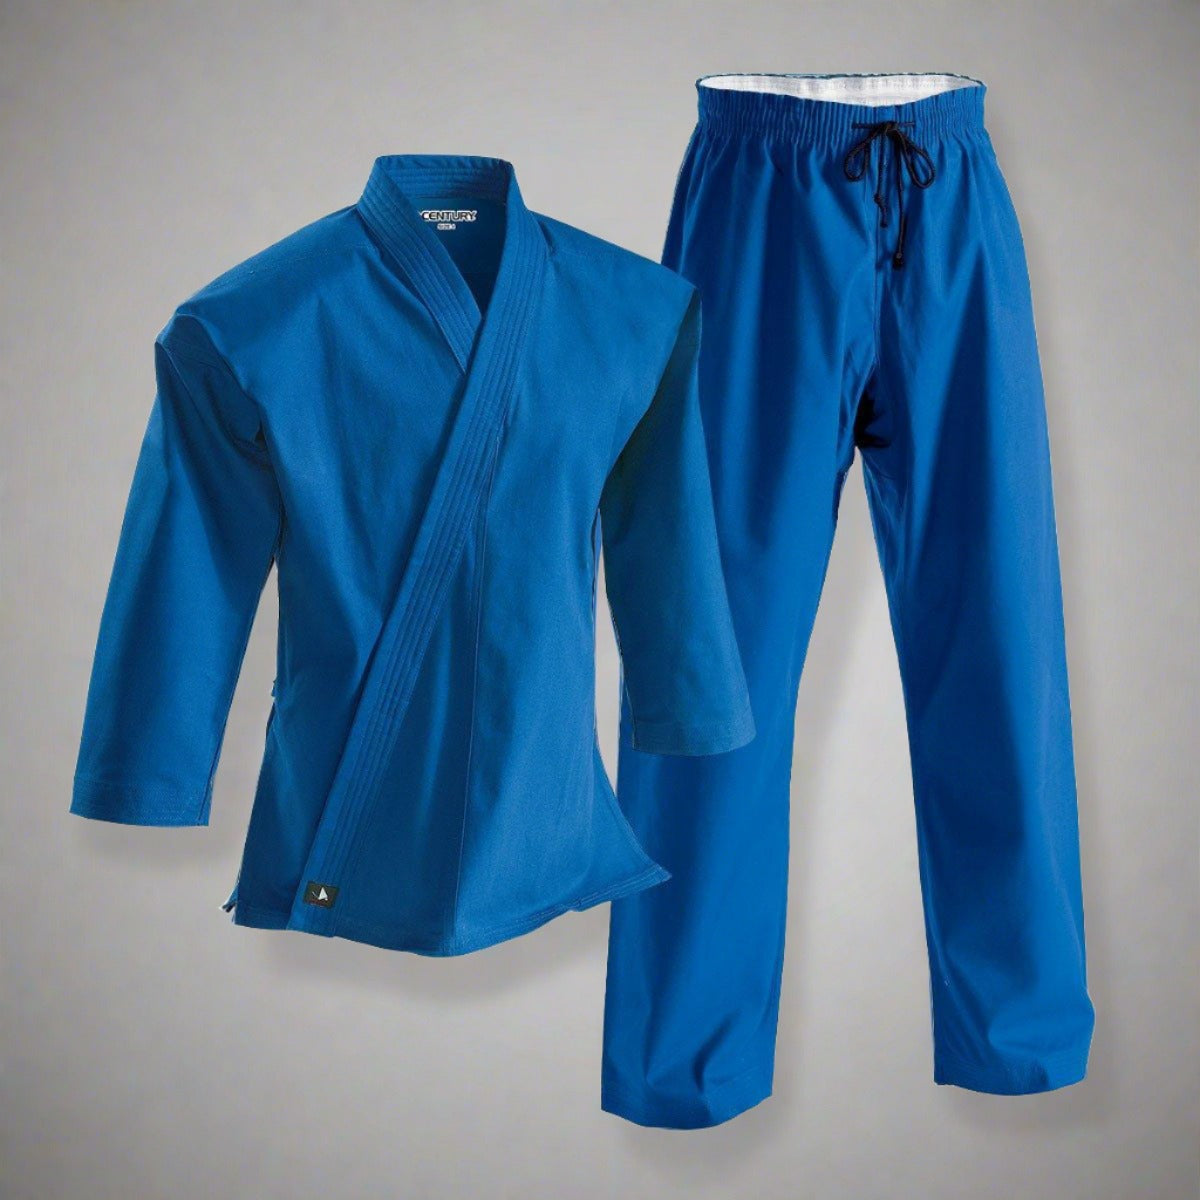 10 oz. Middleweight Brushed Cotton Uniform - Blue - Violent Art Shop